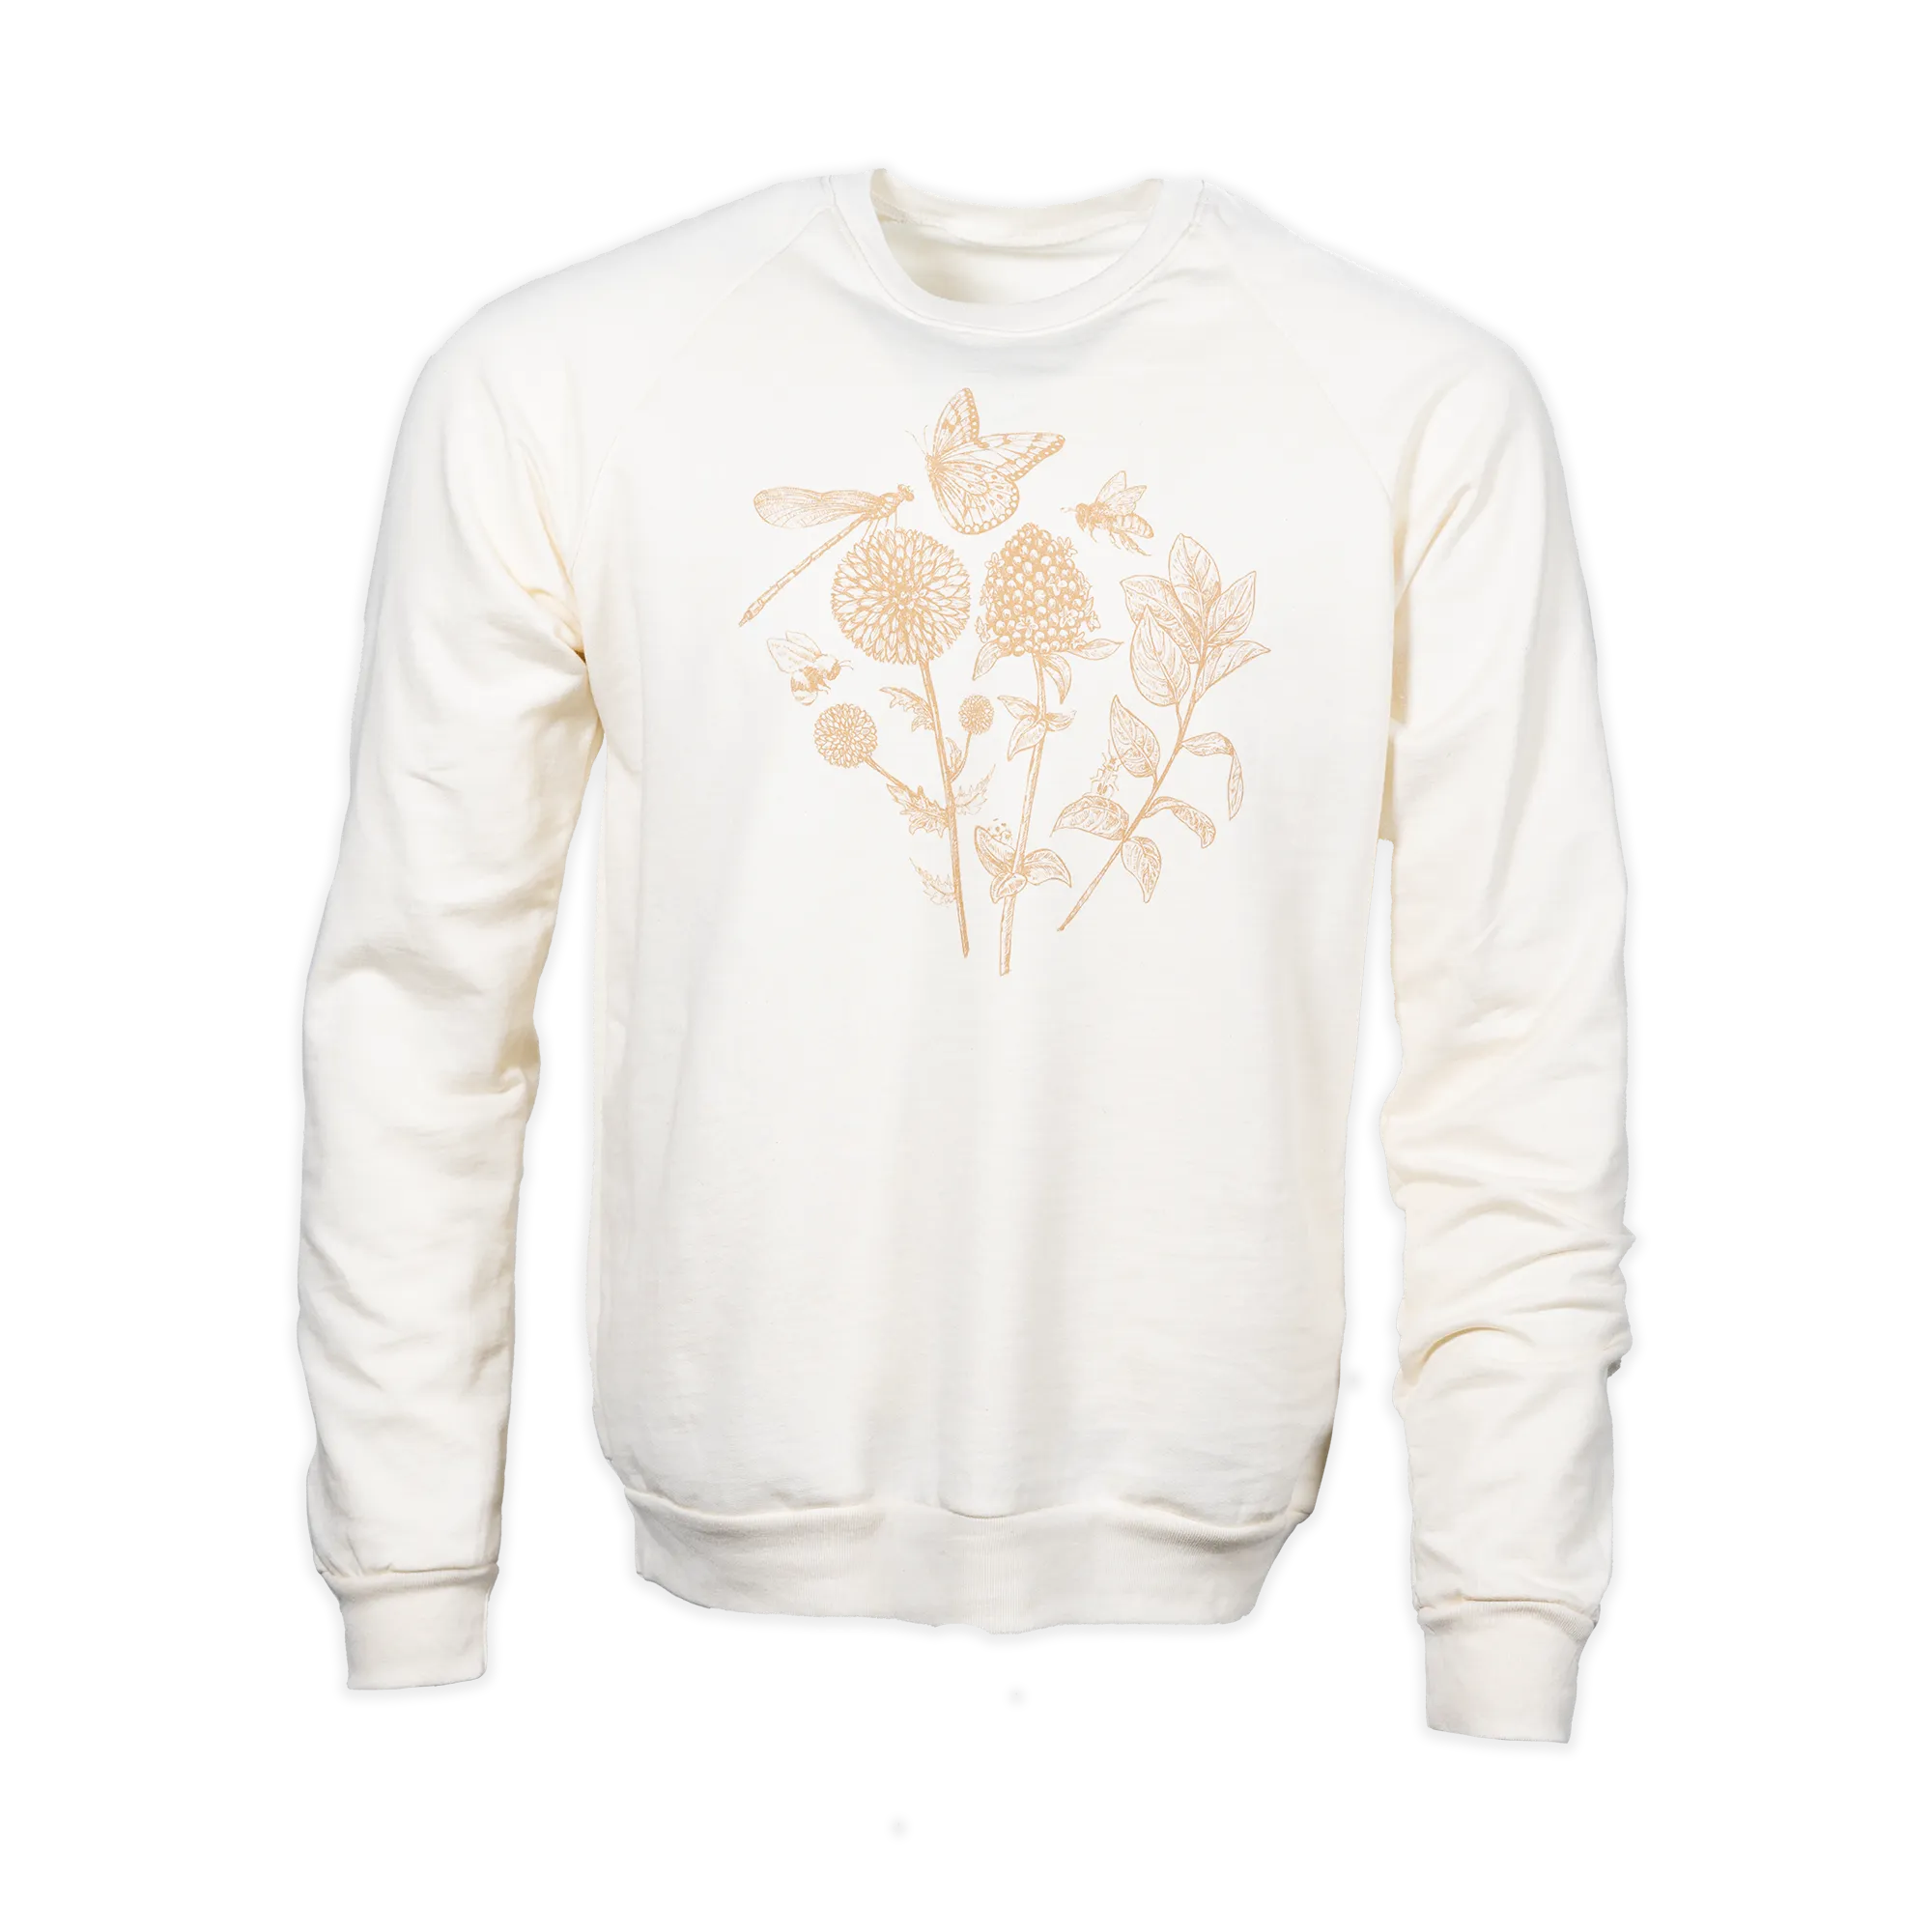 Visit the Pollinator Sweatshirt Product Page